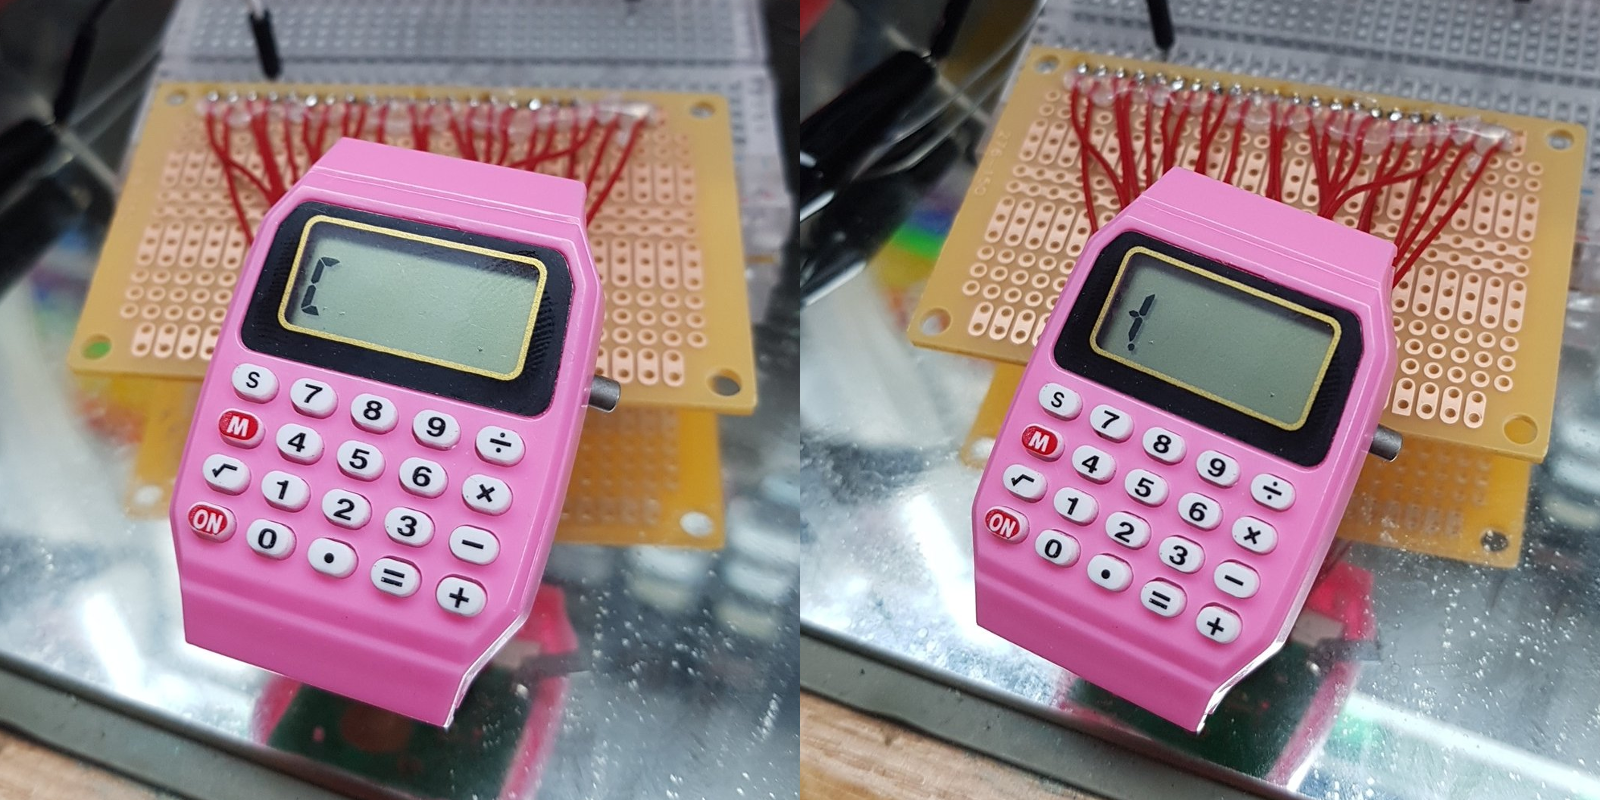 Pcb calculator 2021